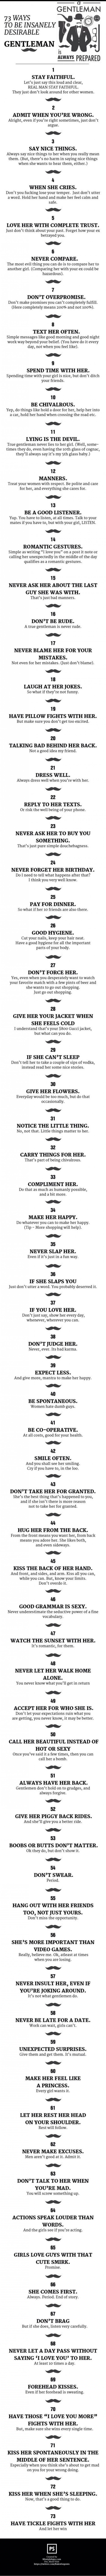 73 Ways To Be A Gentleman